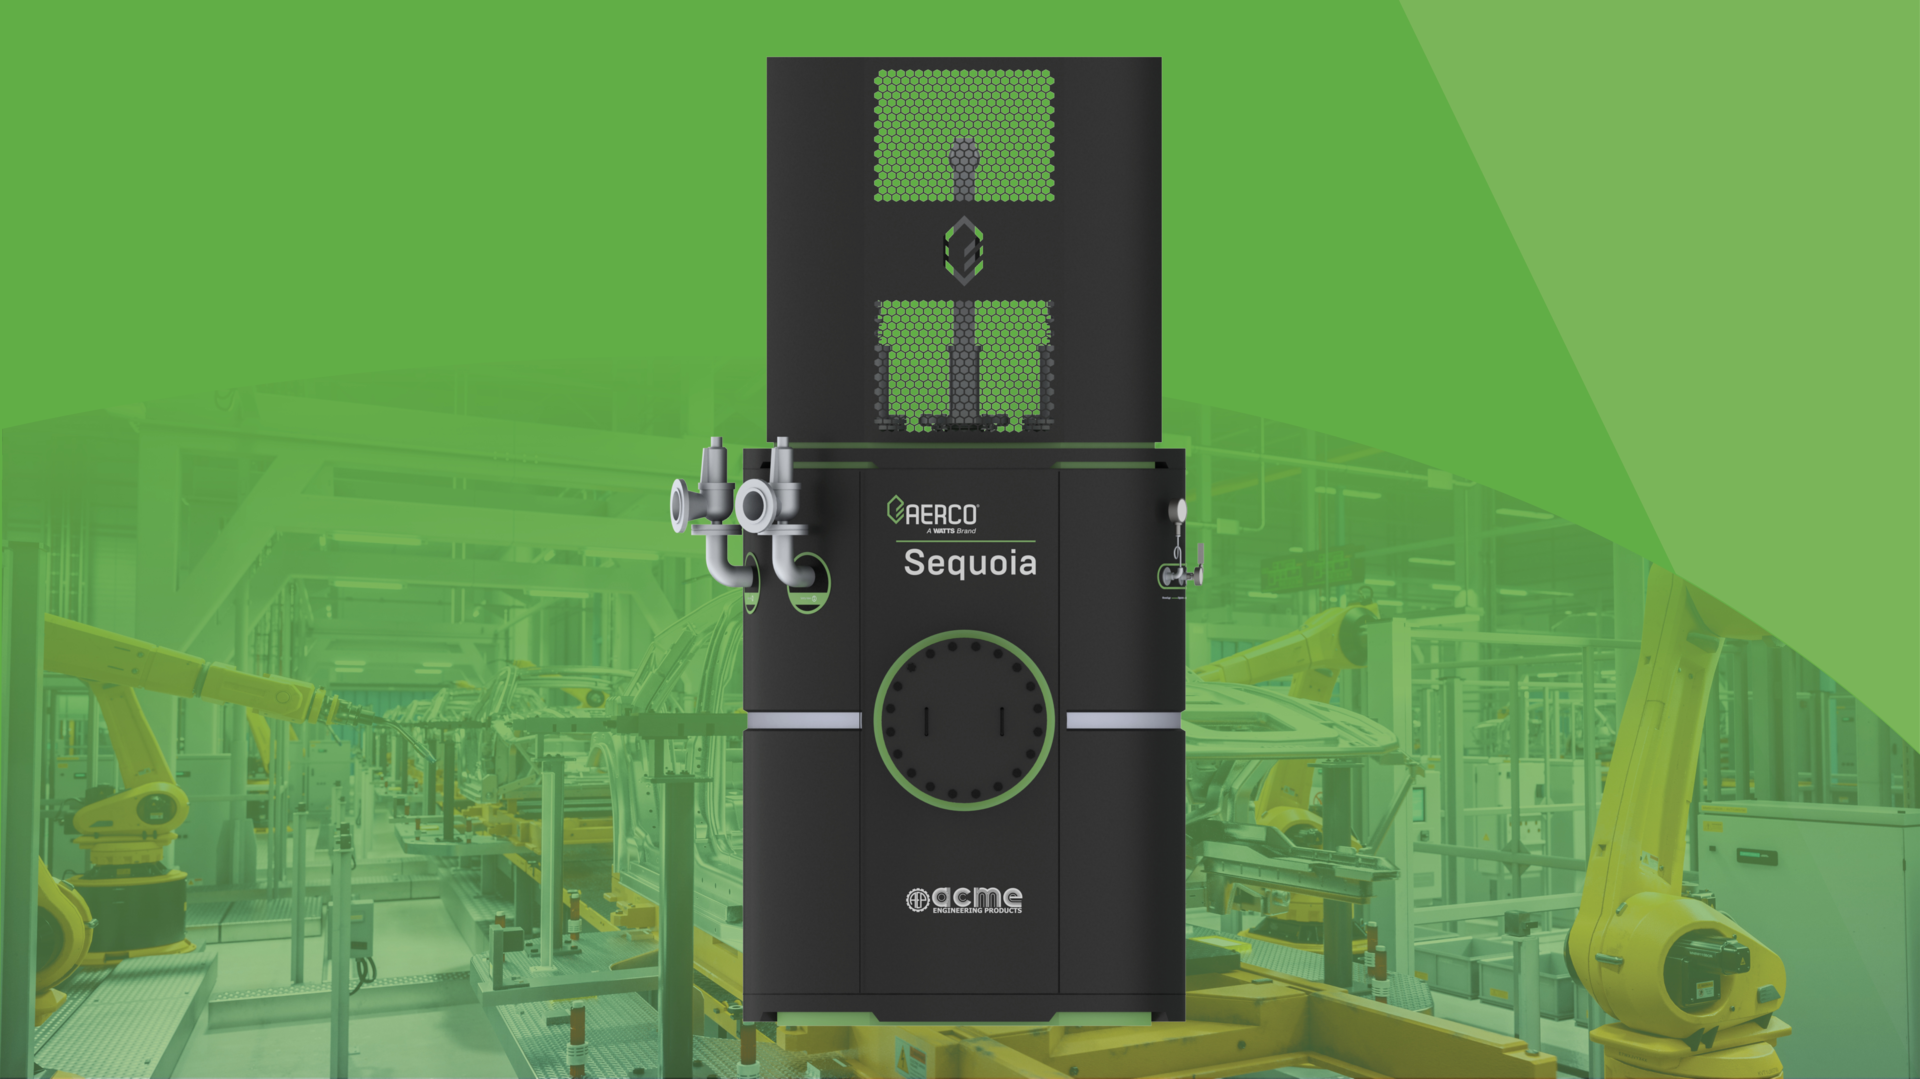 Image of new AERCO boiler